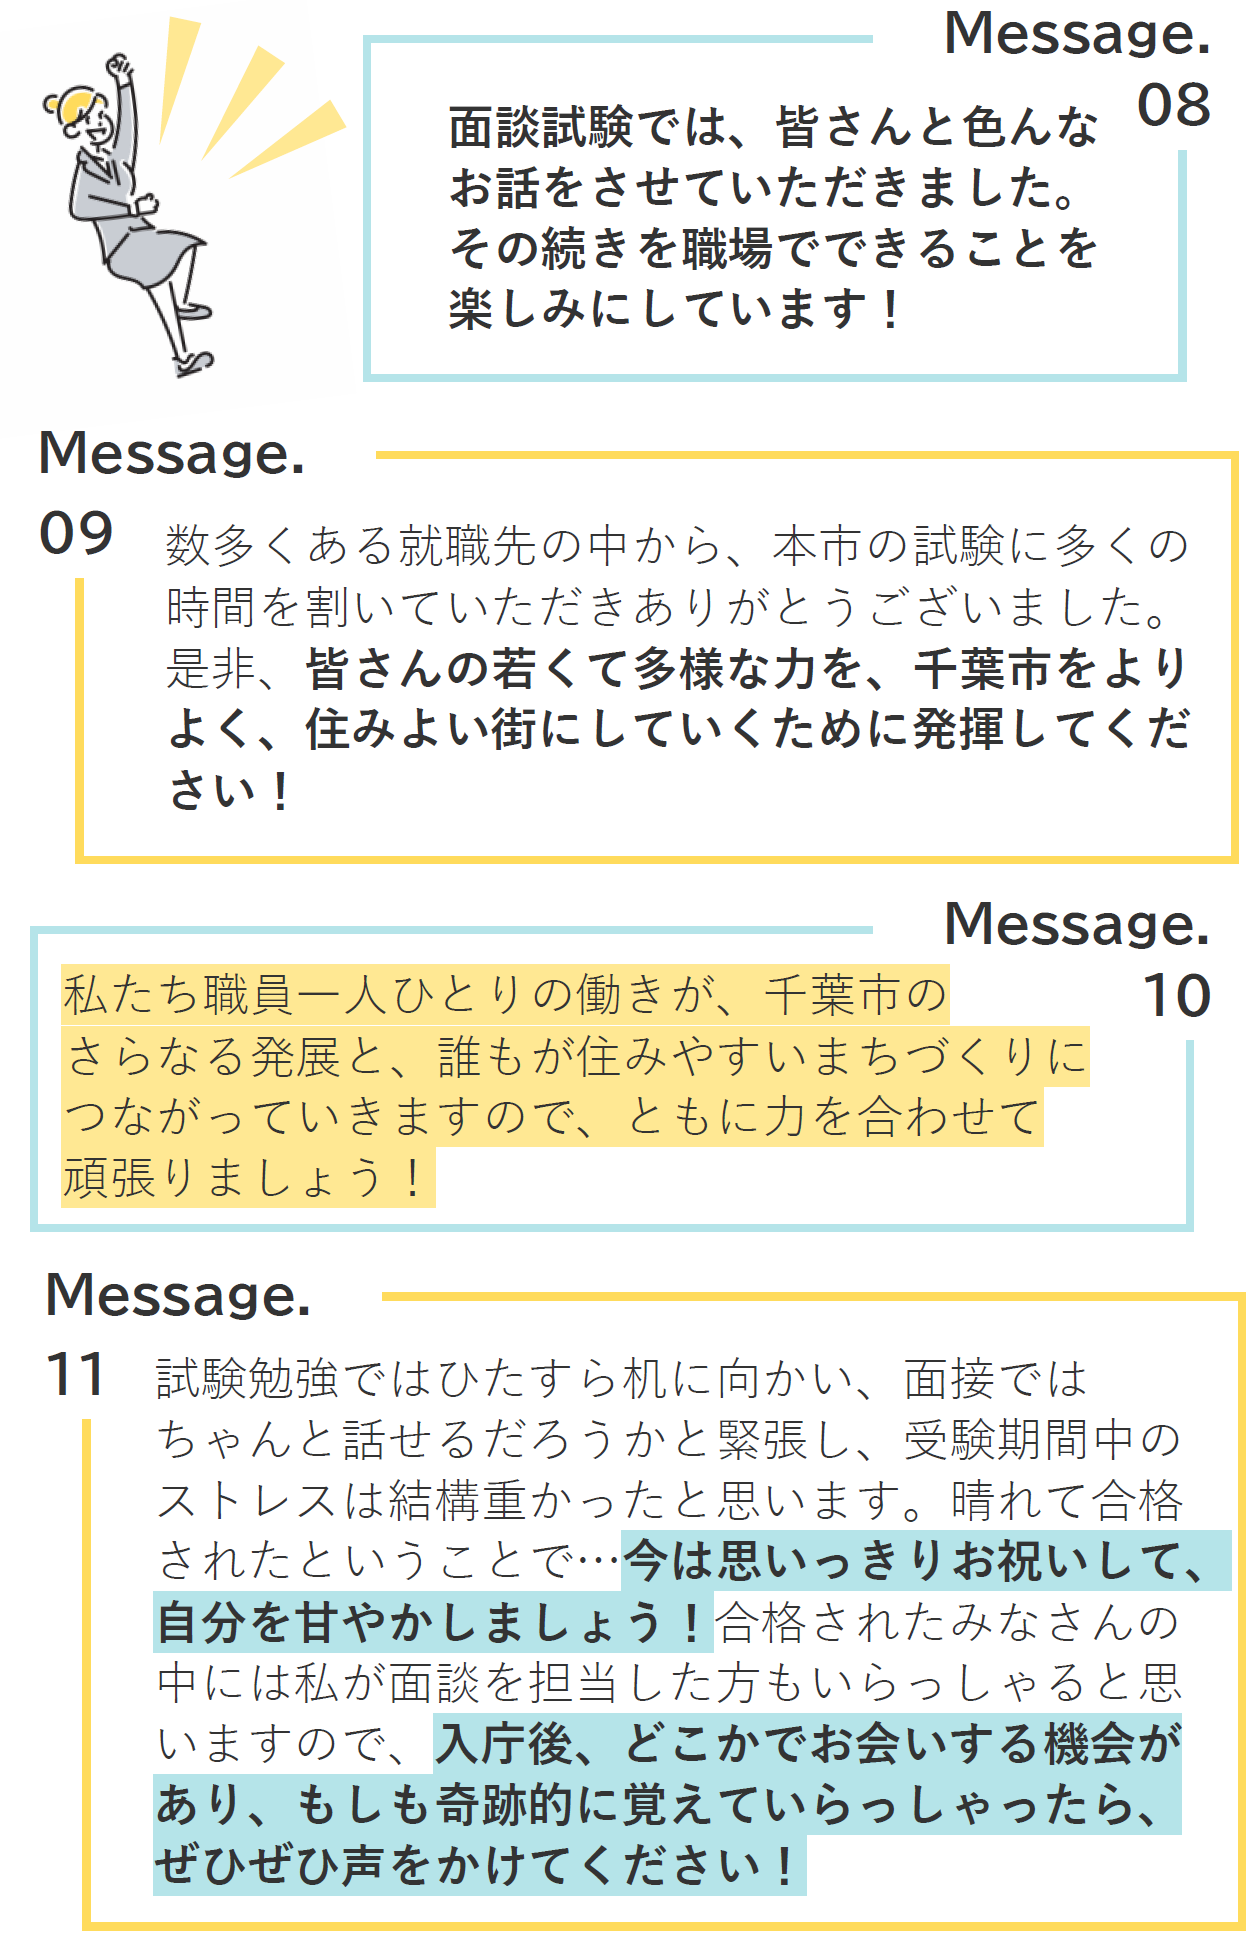 message-04